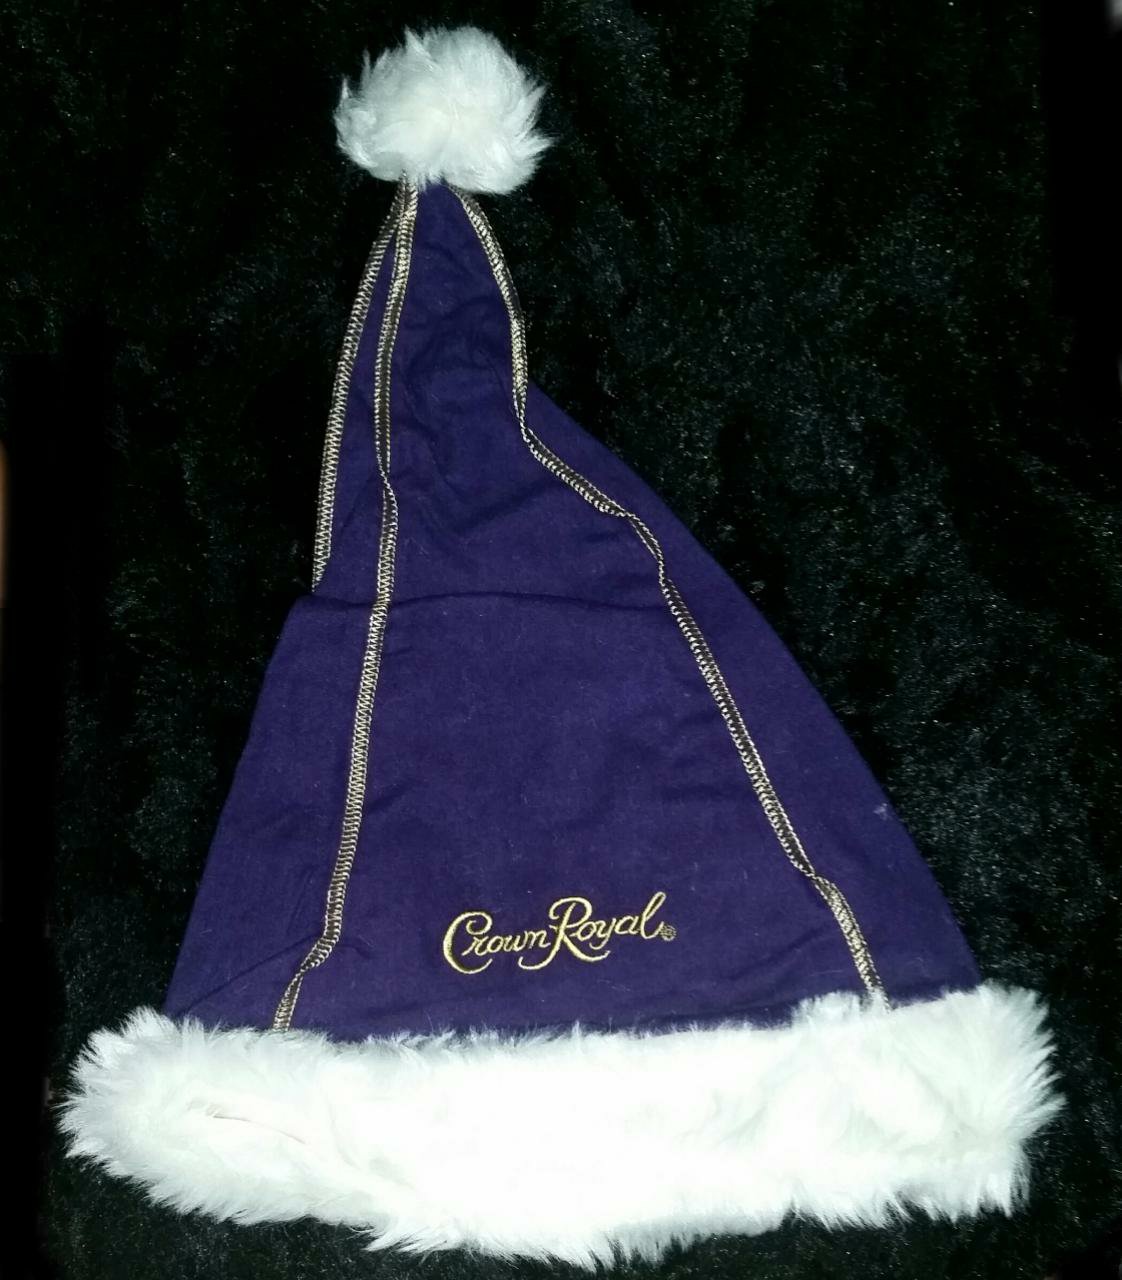 santa hat with crown